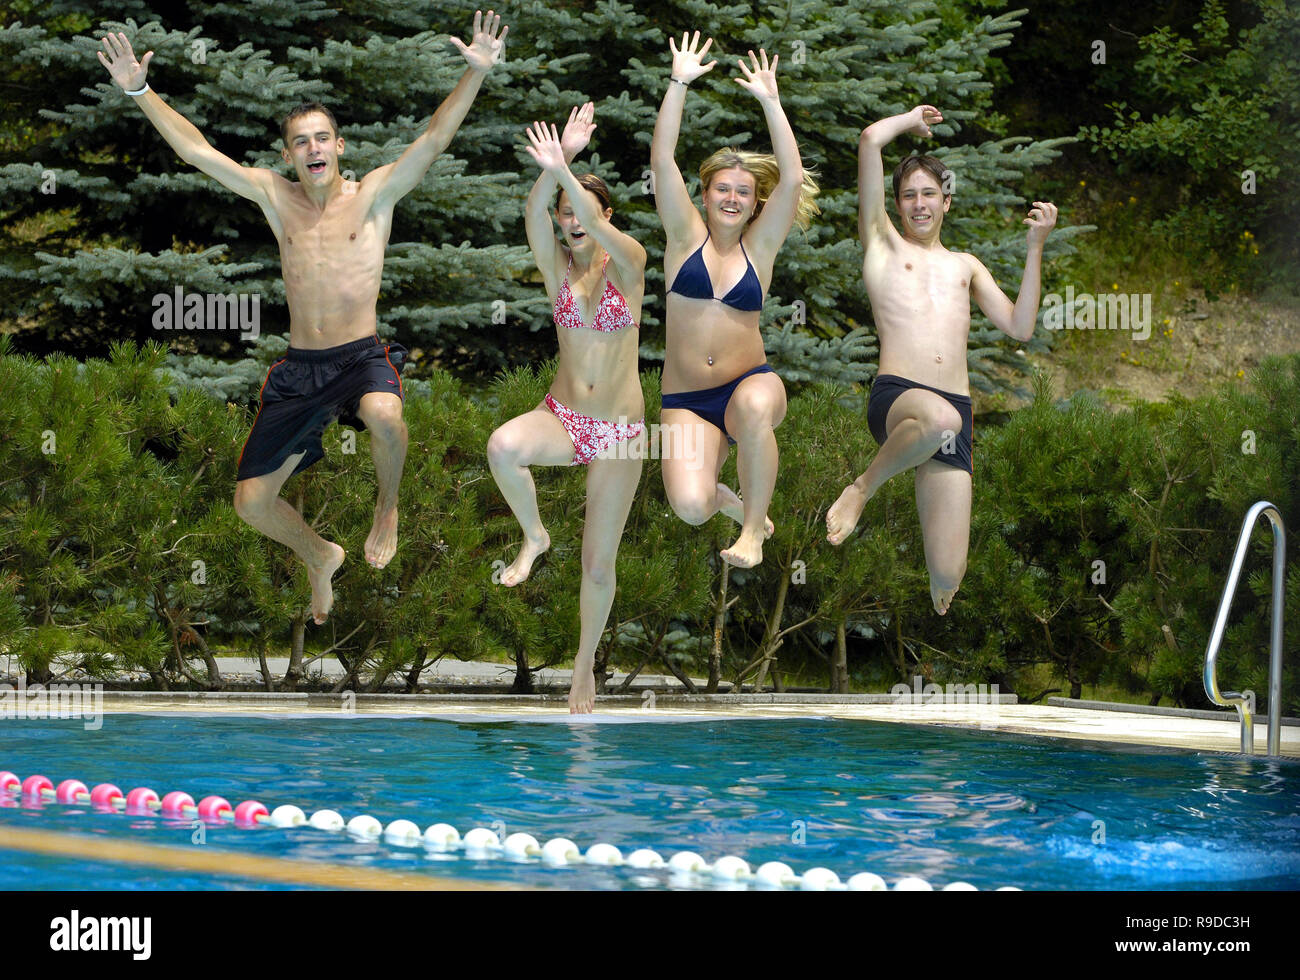 14.07.2005, Zwickau, in Sassonia, Germania - Schueler springen zur Erfrischung in ein Schwimmbecken. 0Ux050714D120CAROEX.JPG [modello di rilascio: No, re di proprietà Foto Stock